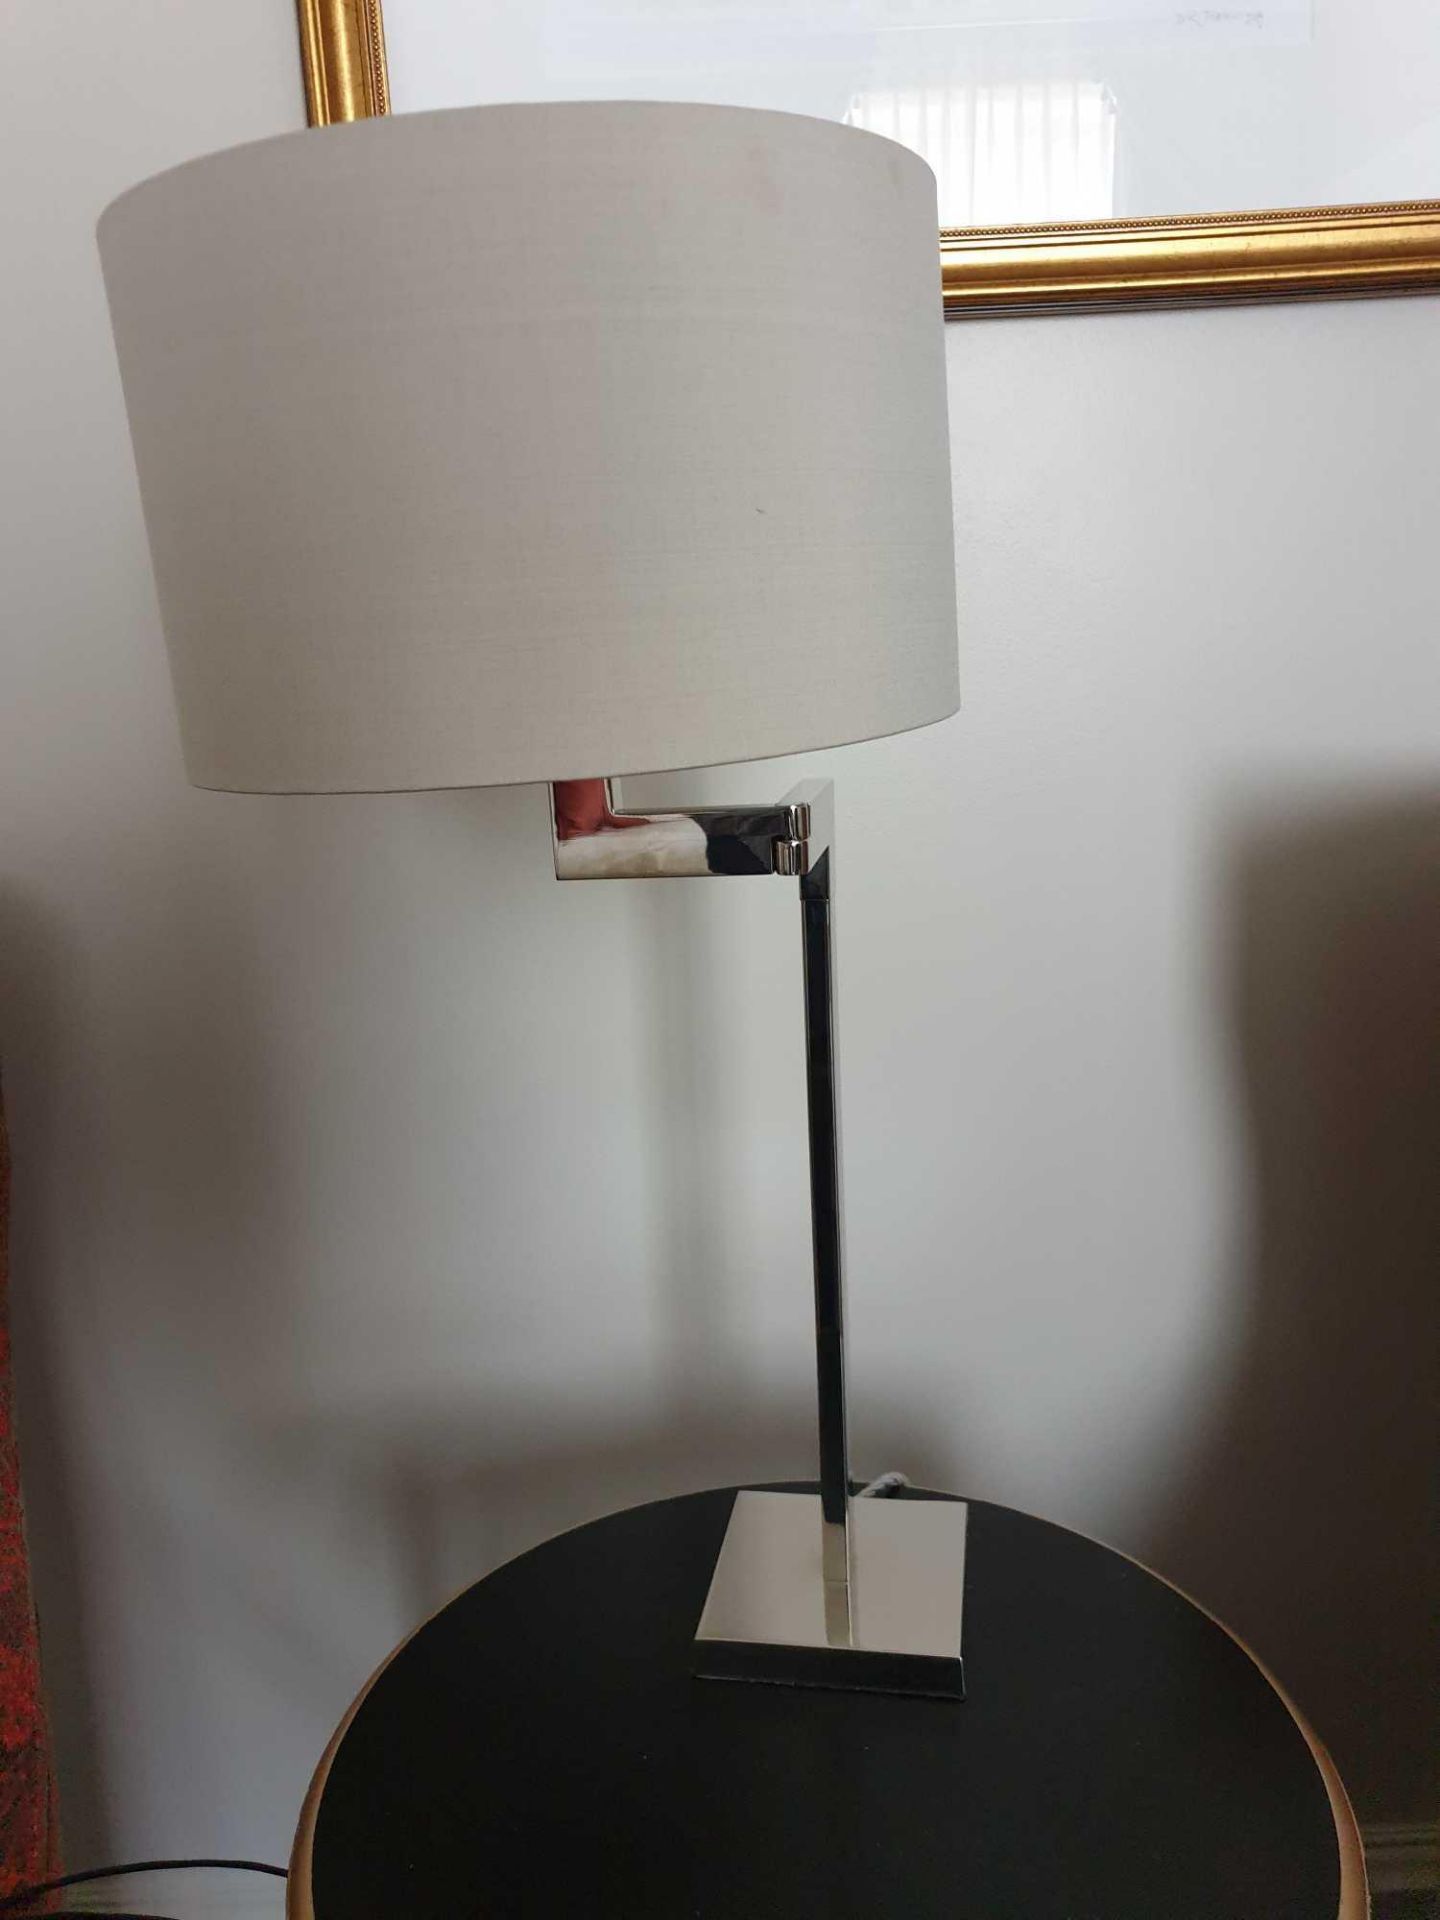 A Pair Porta Romana SLD36 Polished Nickel Swivel Arm Table Lamp With Shade 65cm (Room 723 & 724)